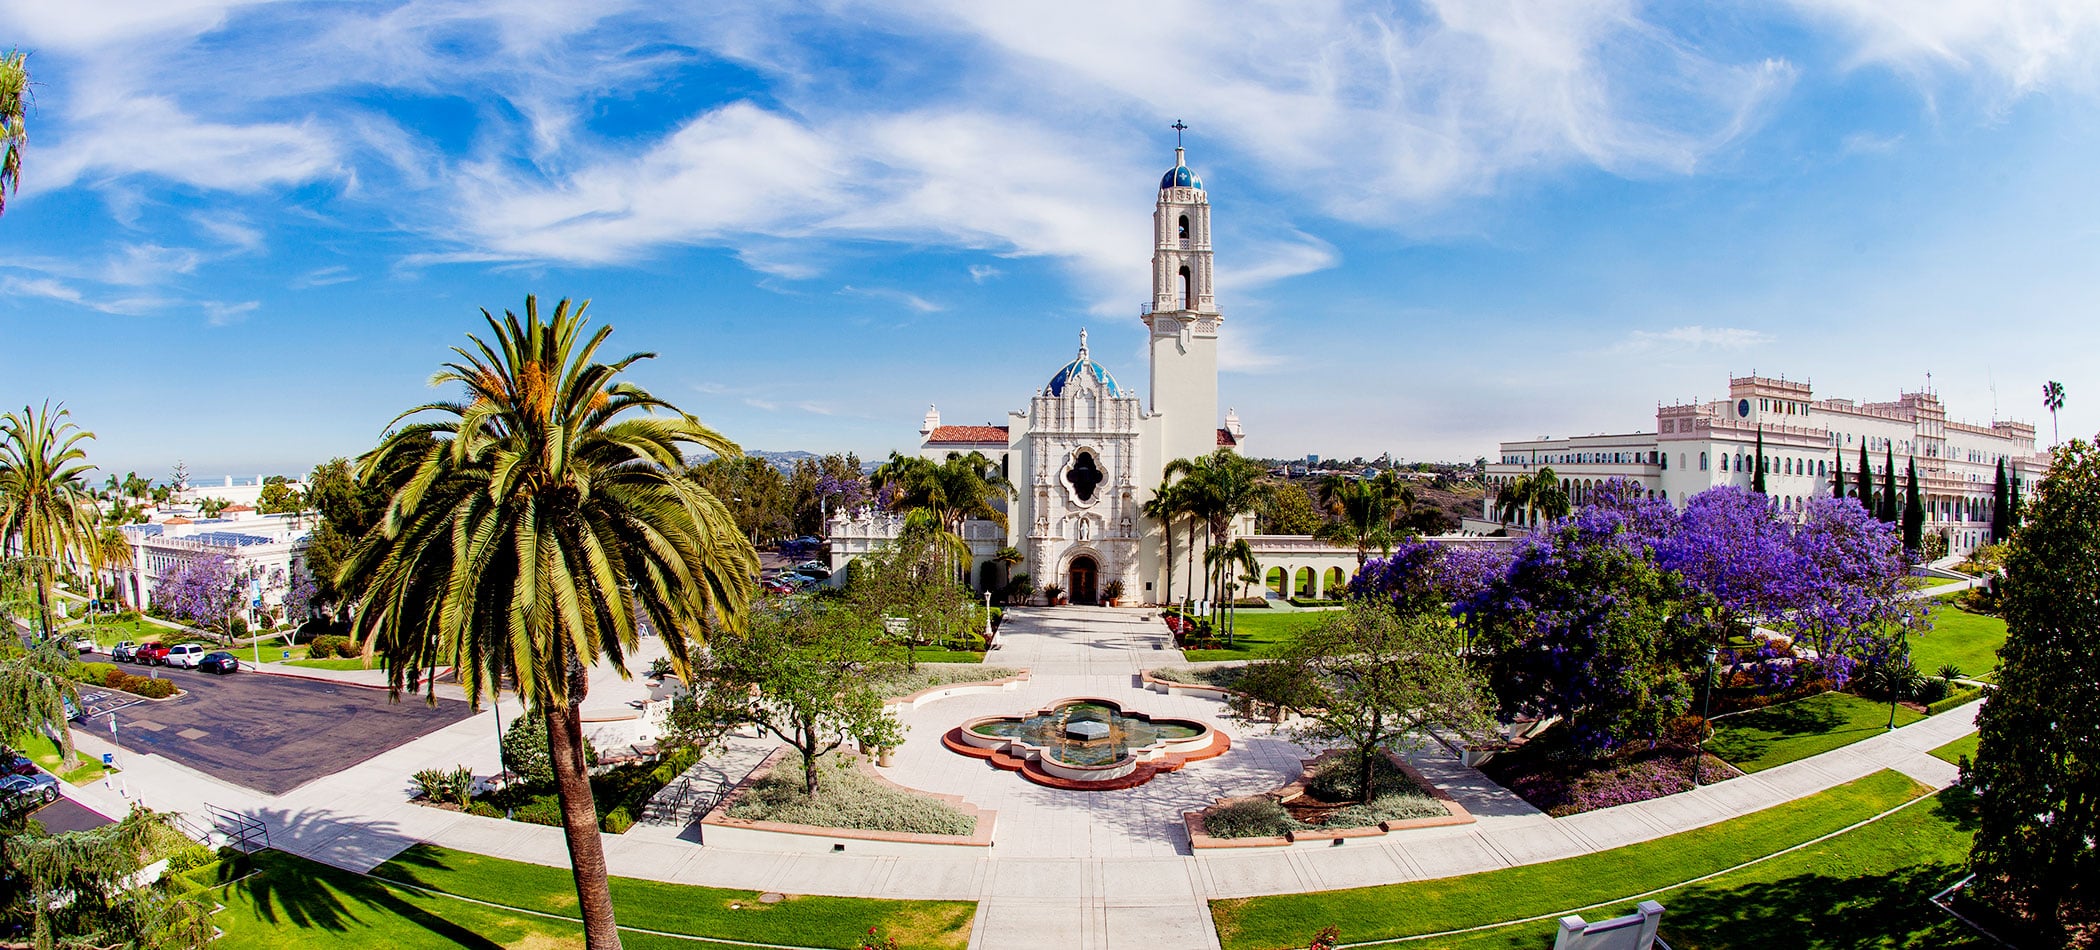 San Diego University